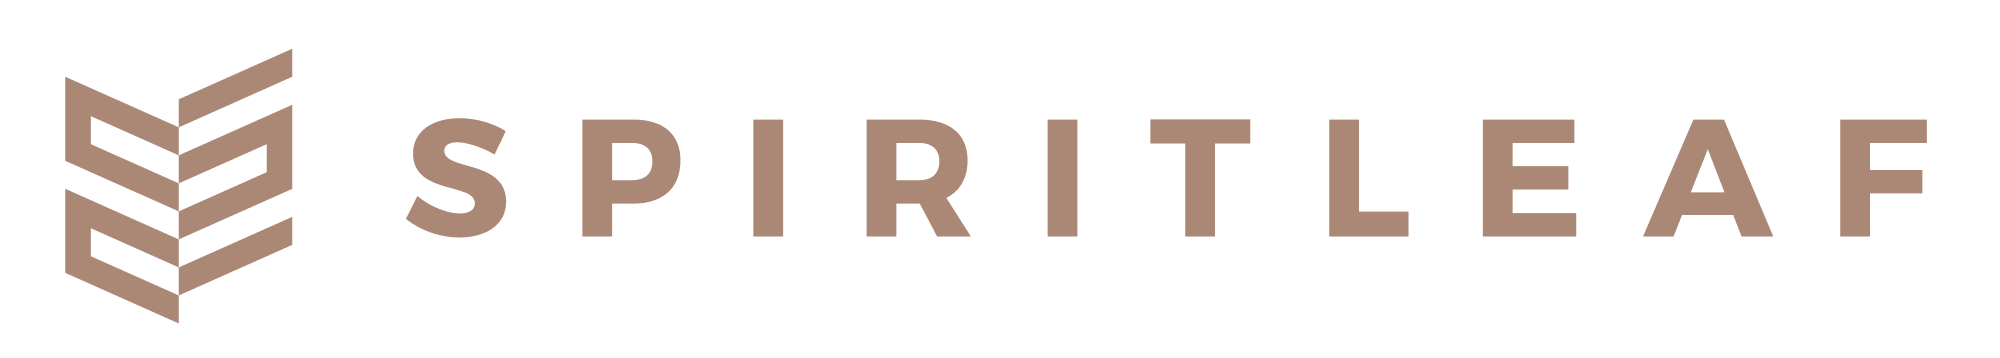 Spiritleaf-Logo-Hash